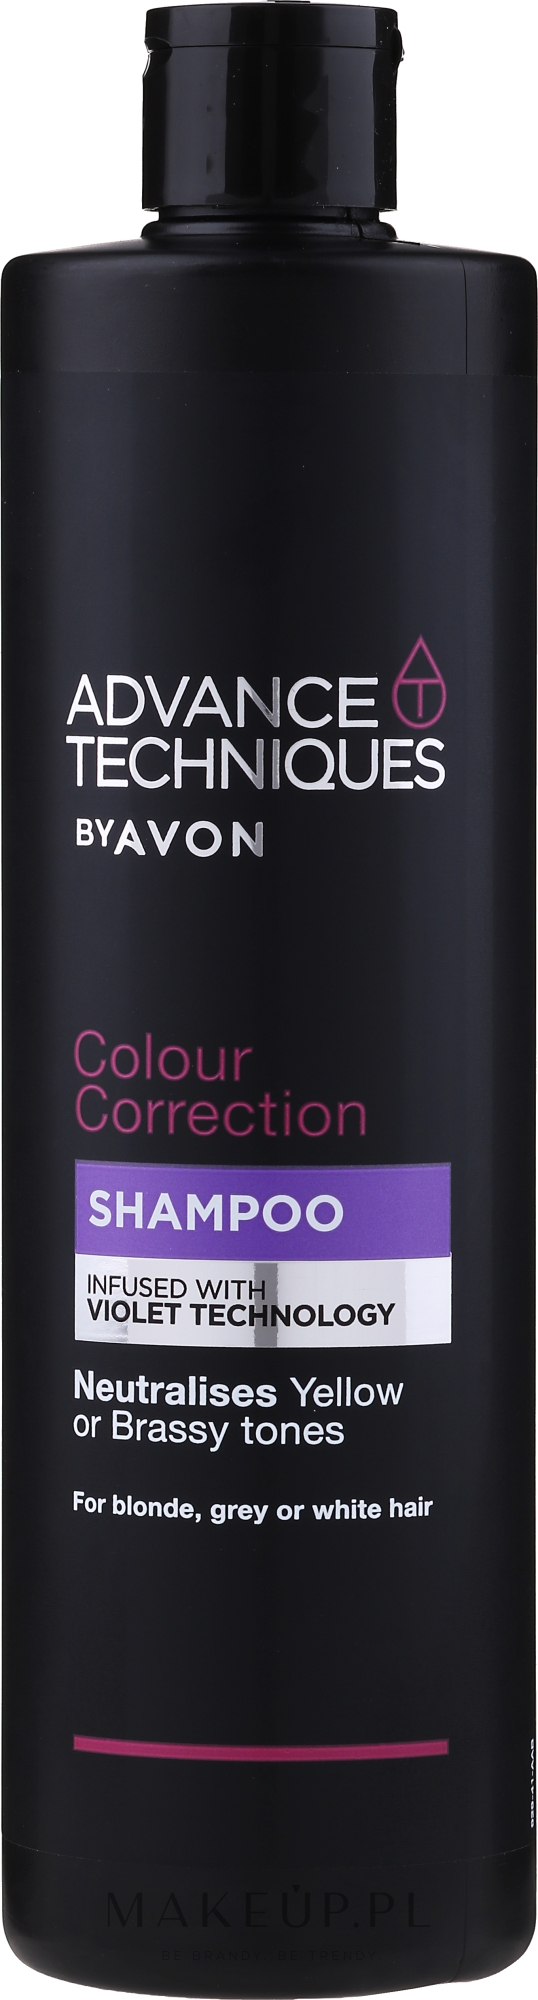 szampon korekcja koloru avon opinie